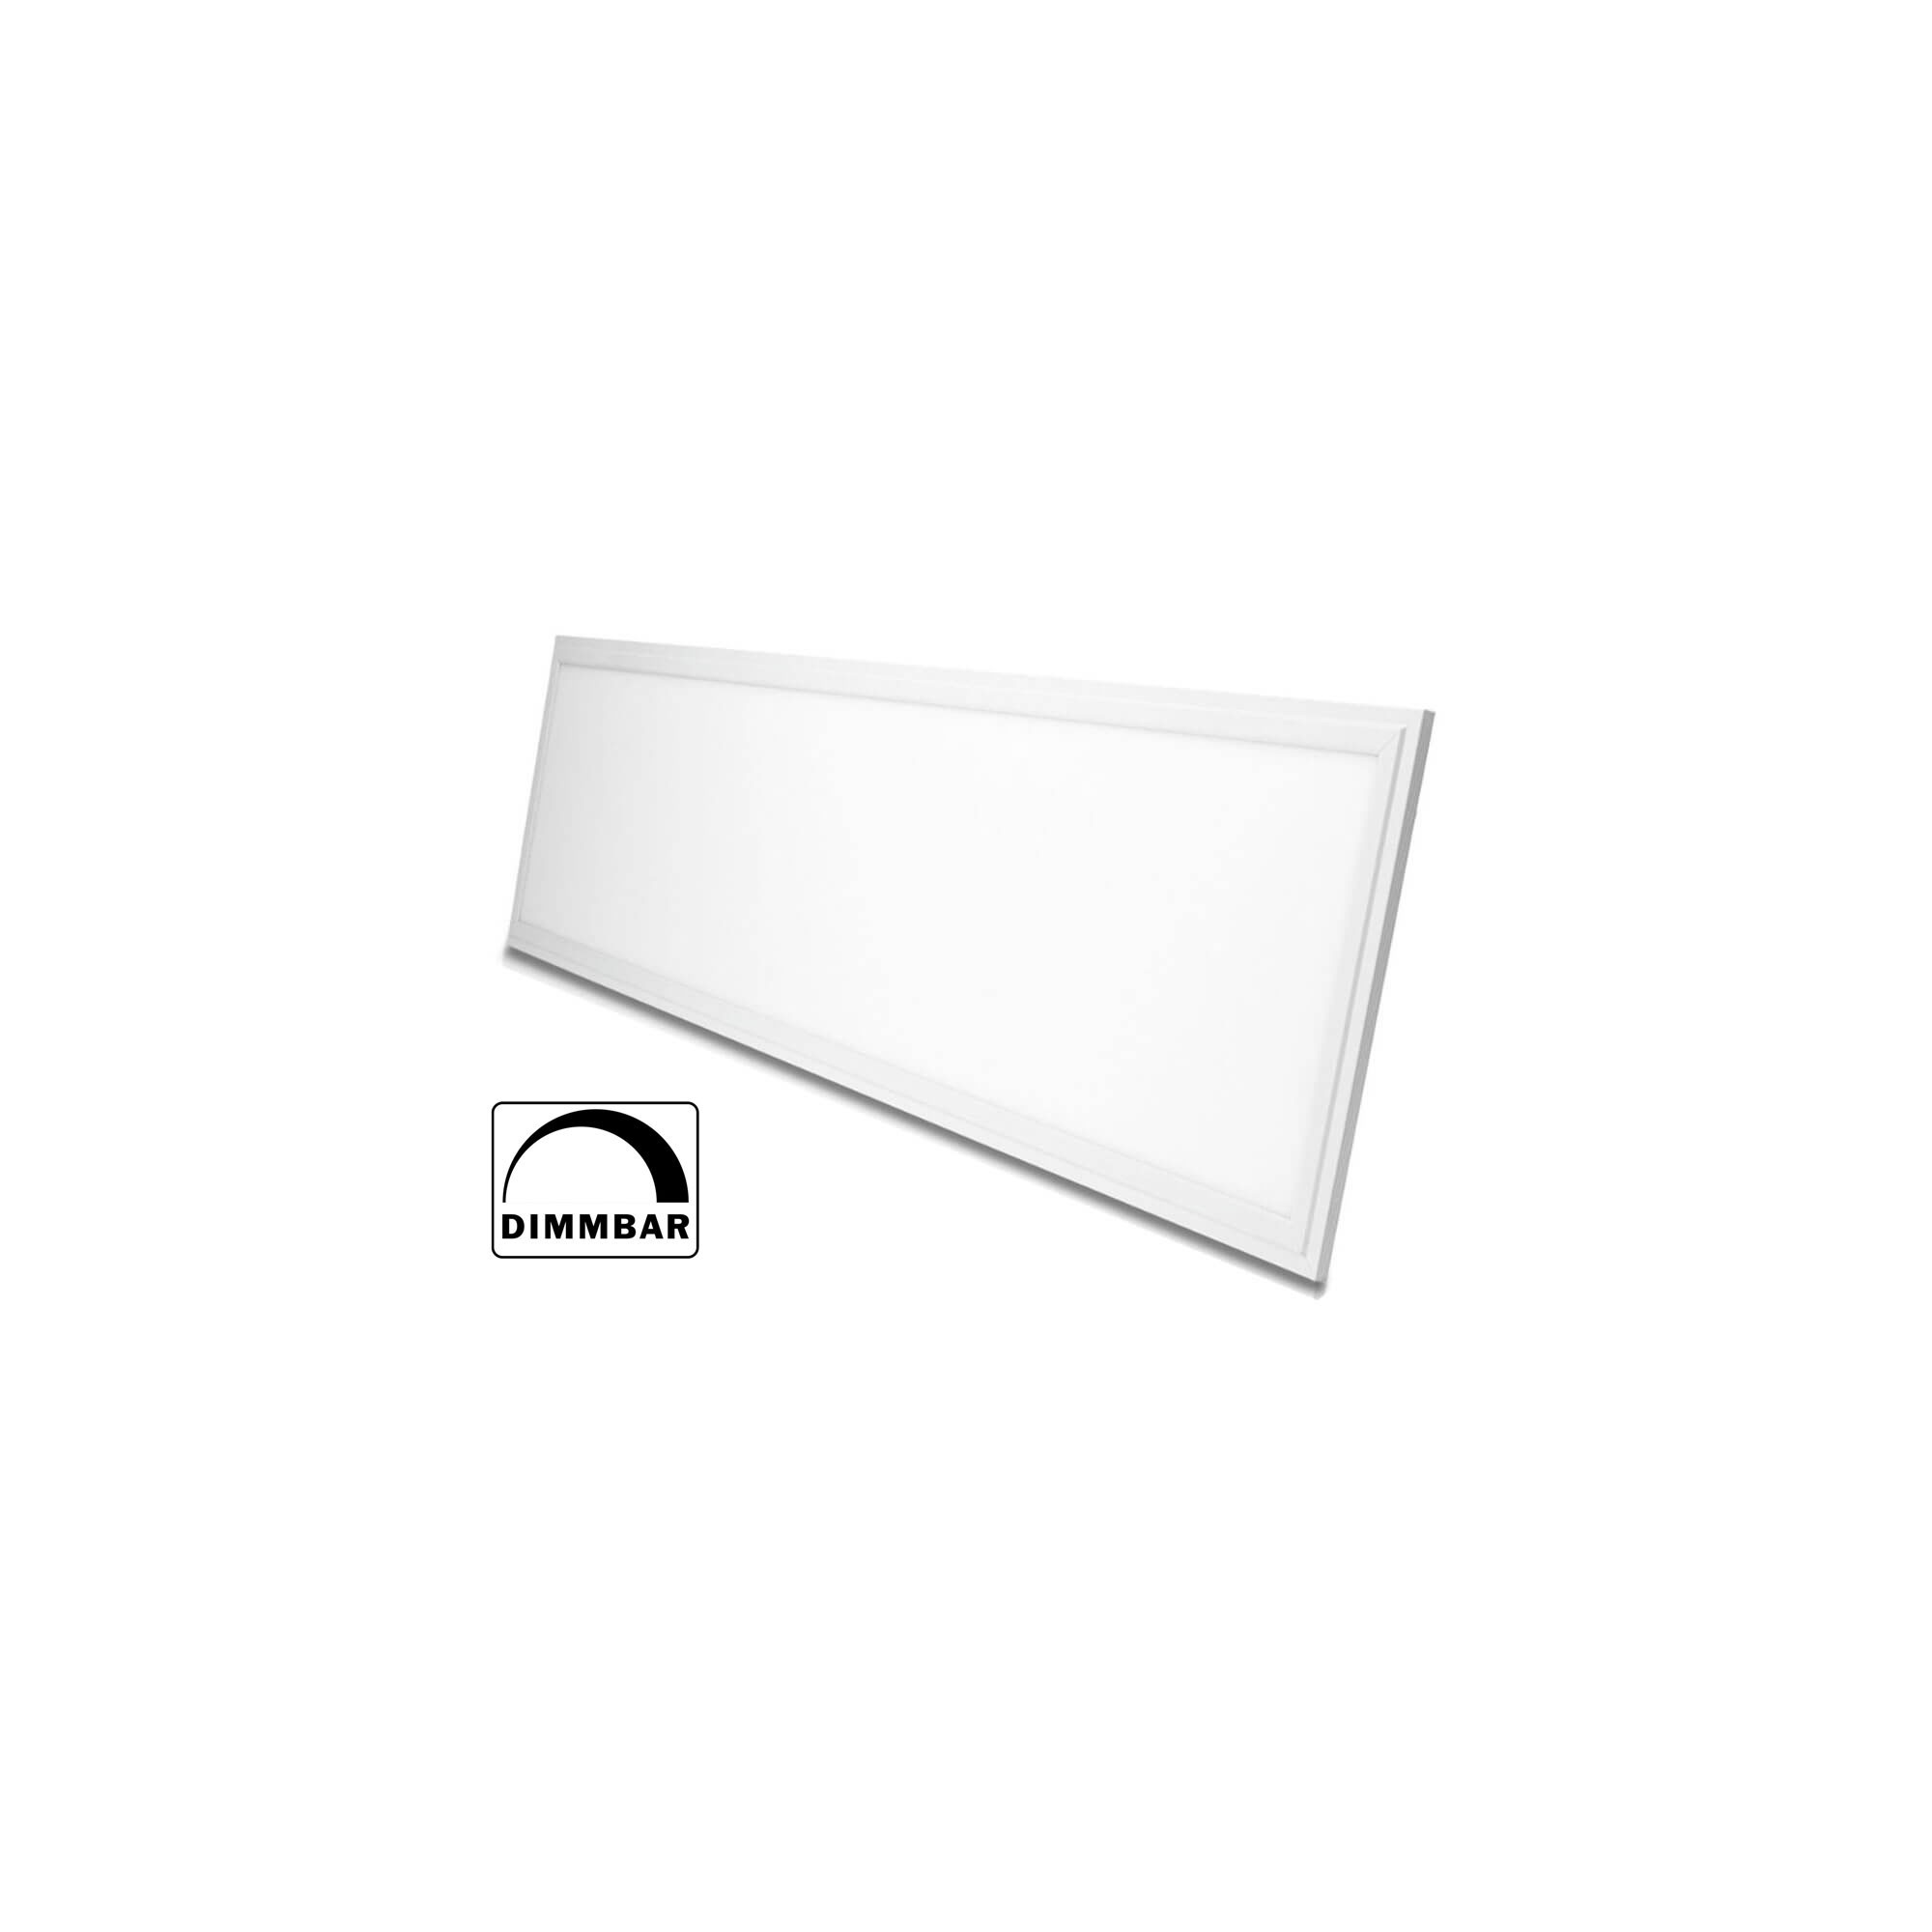 Diseño ultraplano Panel LED blanco regulable 120 x 30cm, 4000K 36W